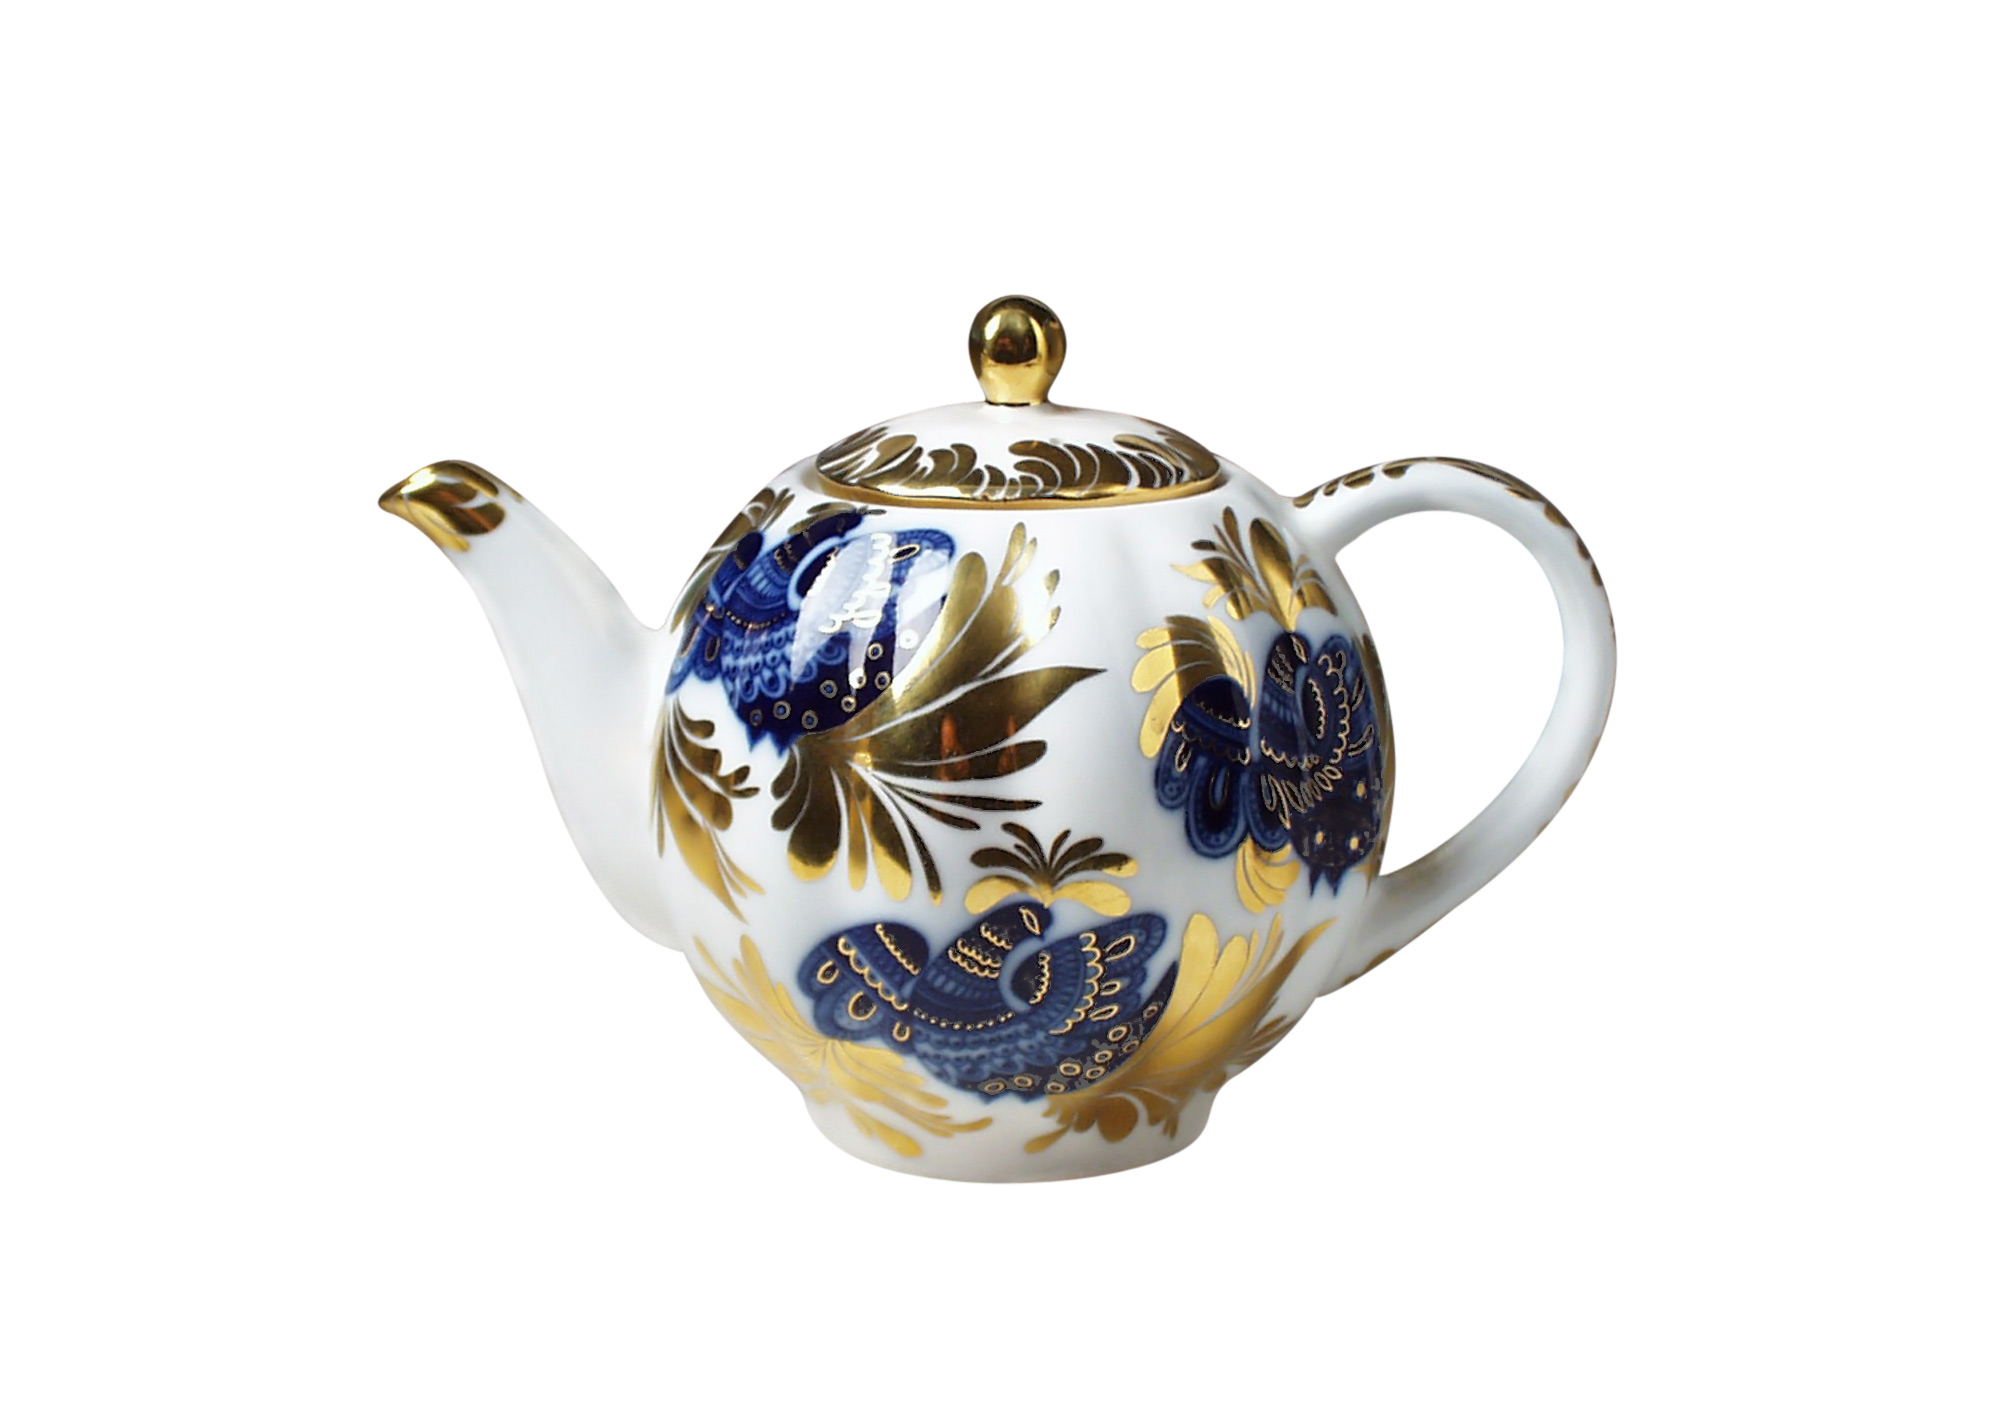 Buy Golden Garden Teapot, large at GoldenCockerel.com